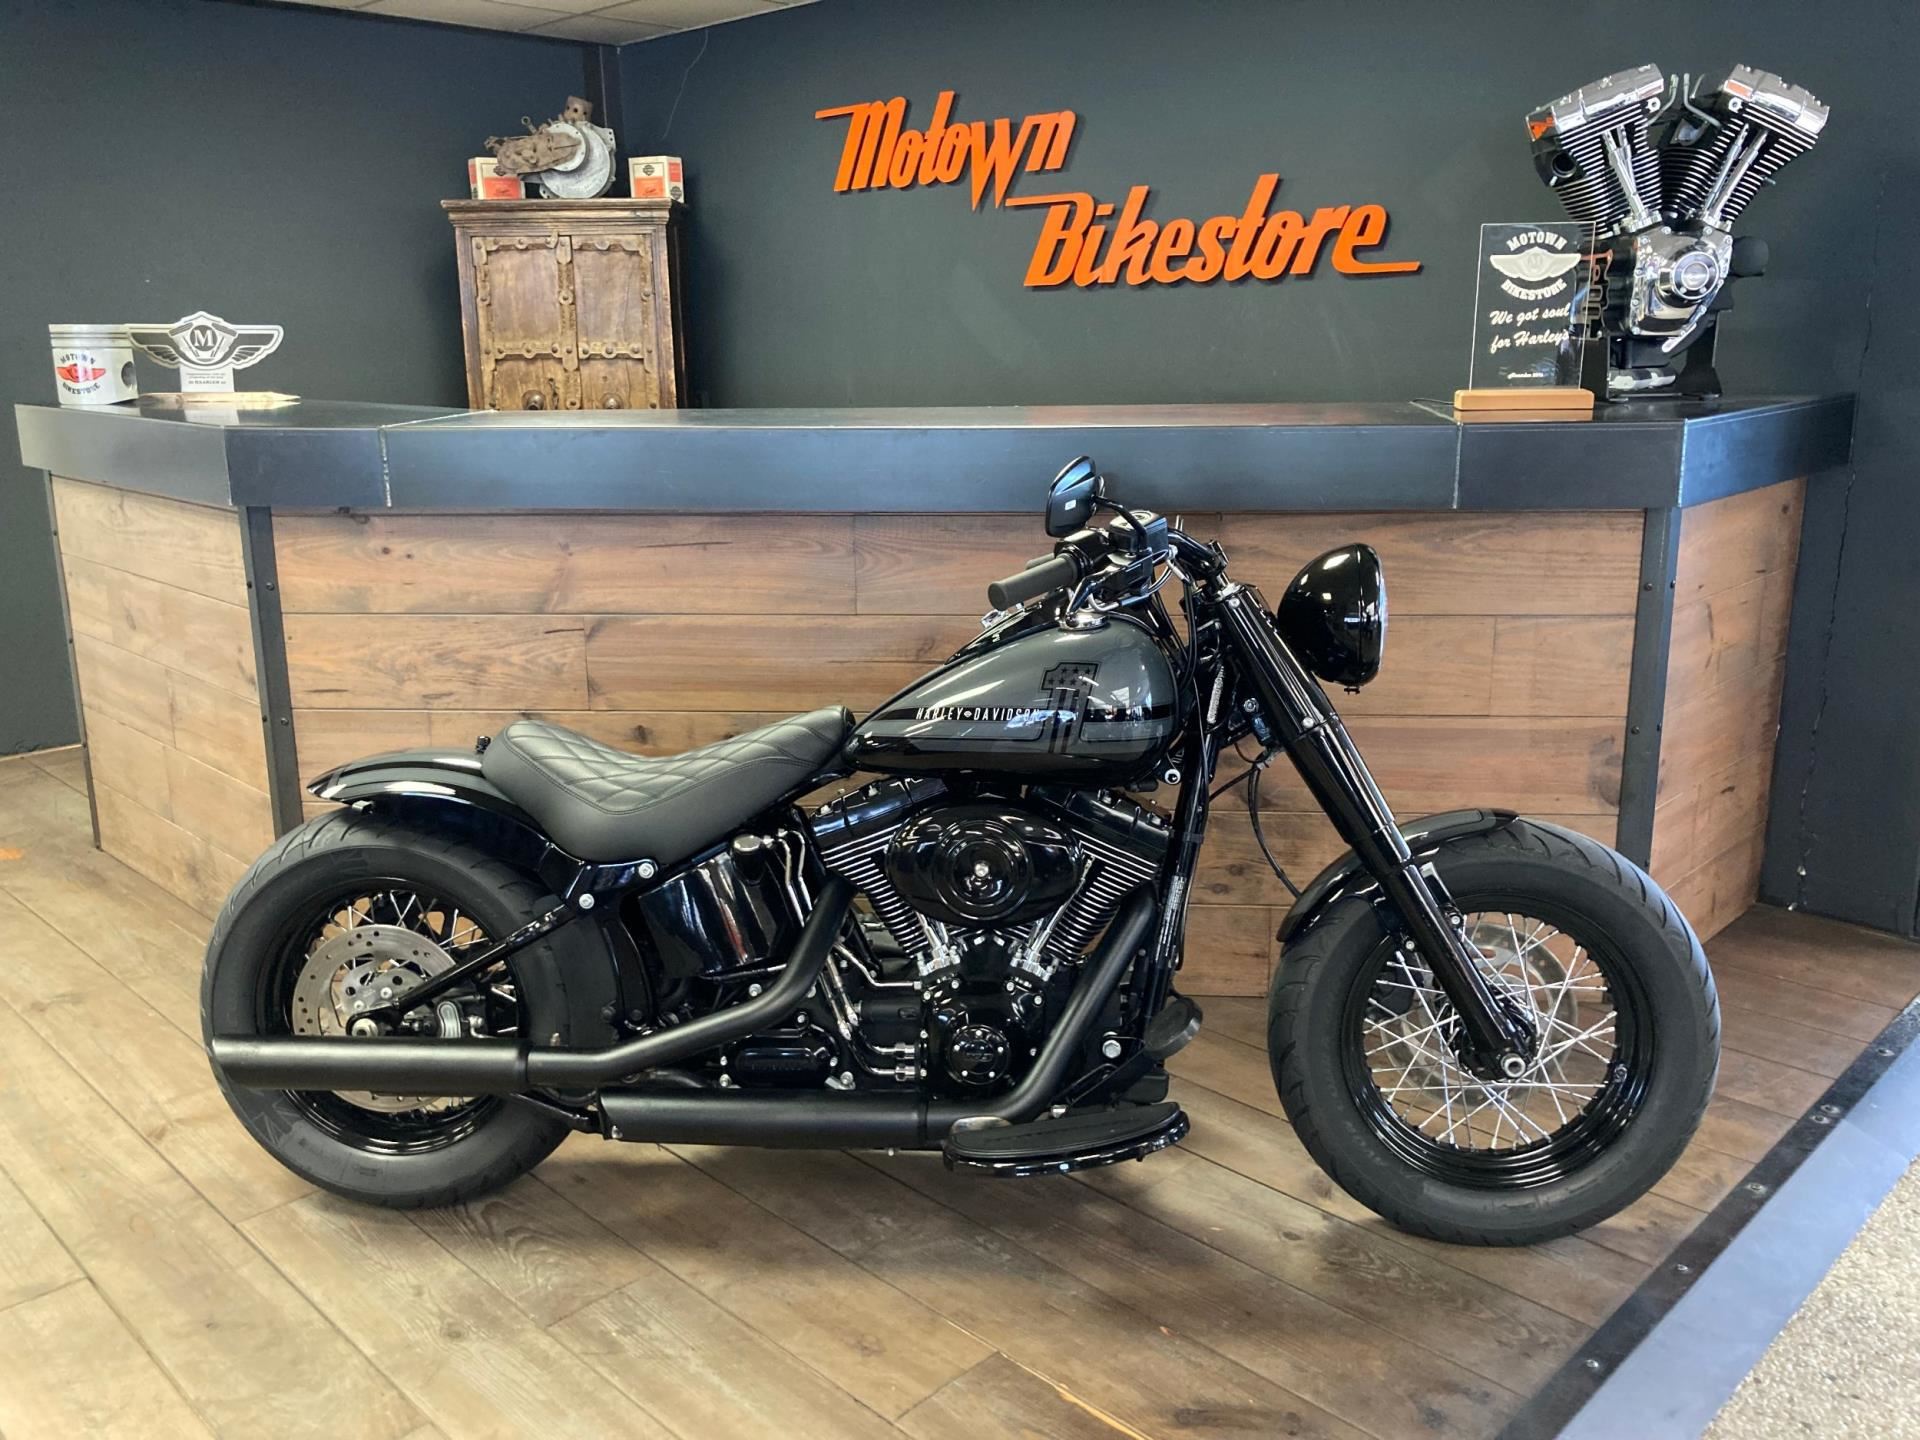 Harley Davidson FLS 103 Softail Custom occasion - Motown Bikestore